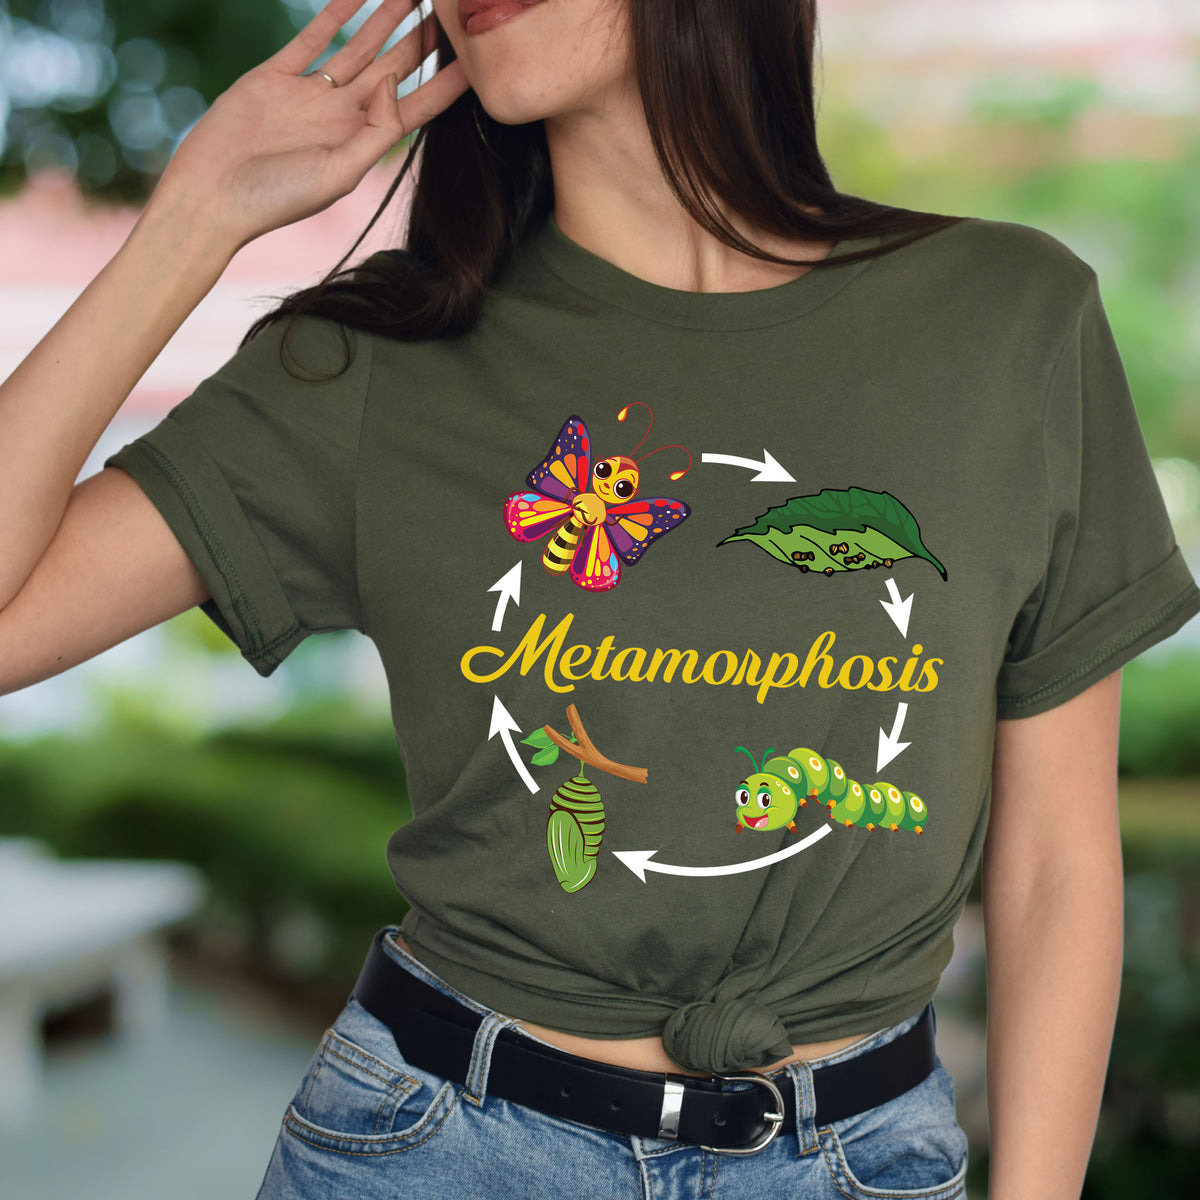 Metamorphosis Life Cycle Biology Shirts | Military Green T-shirt